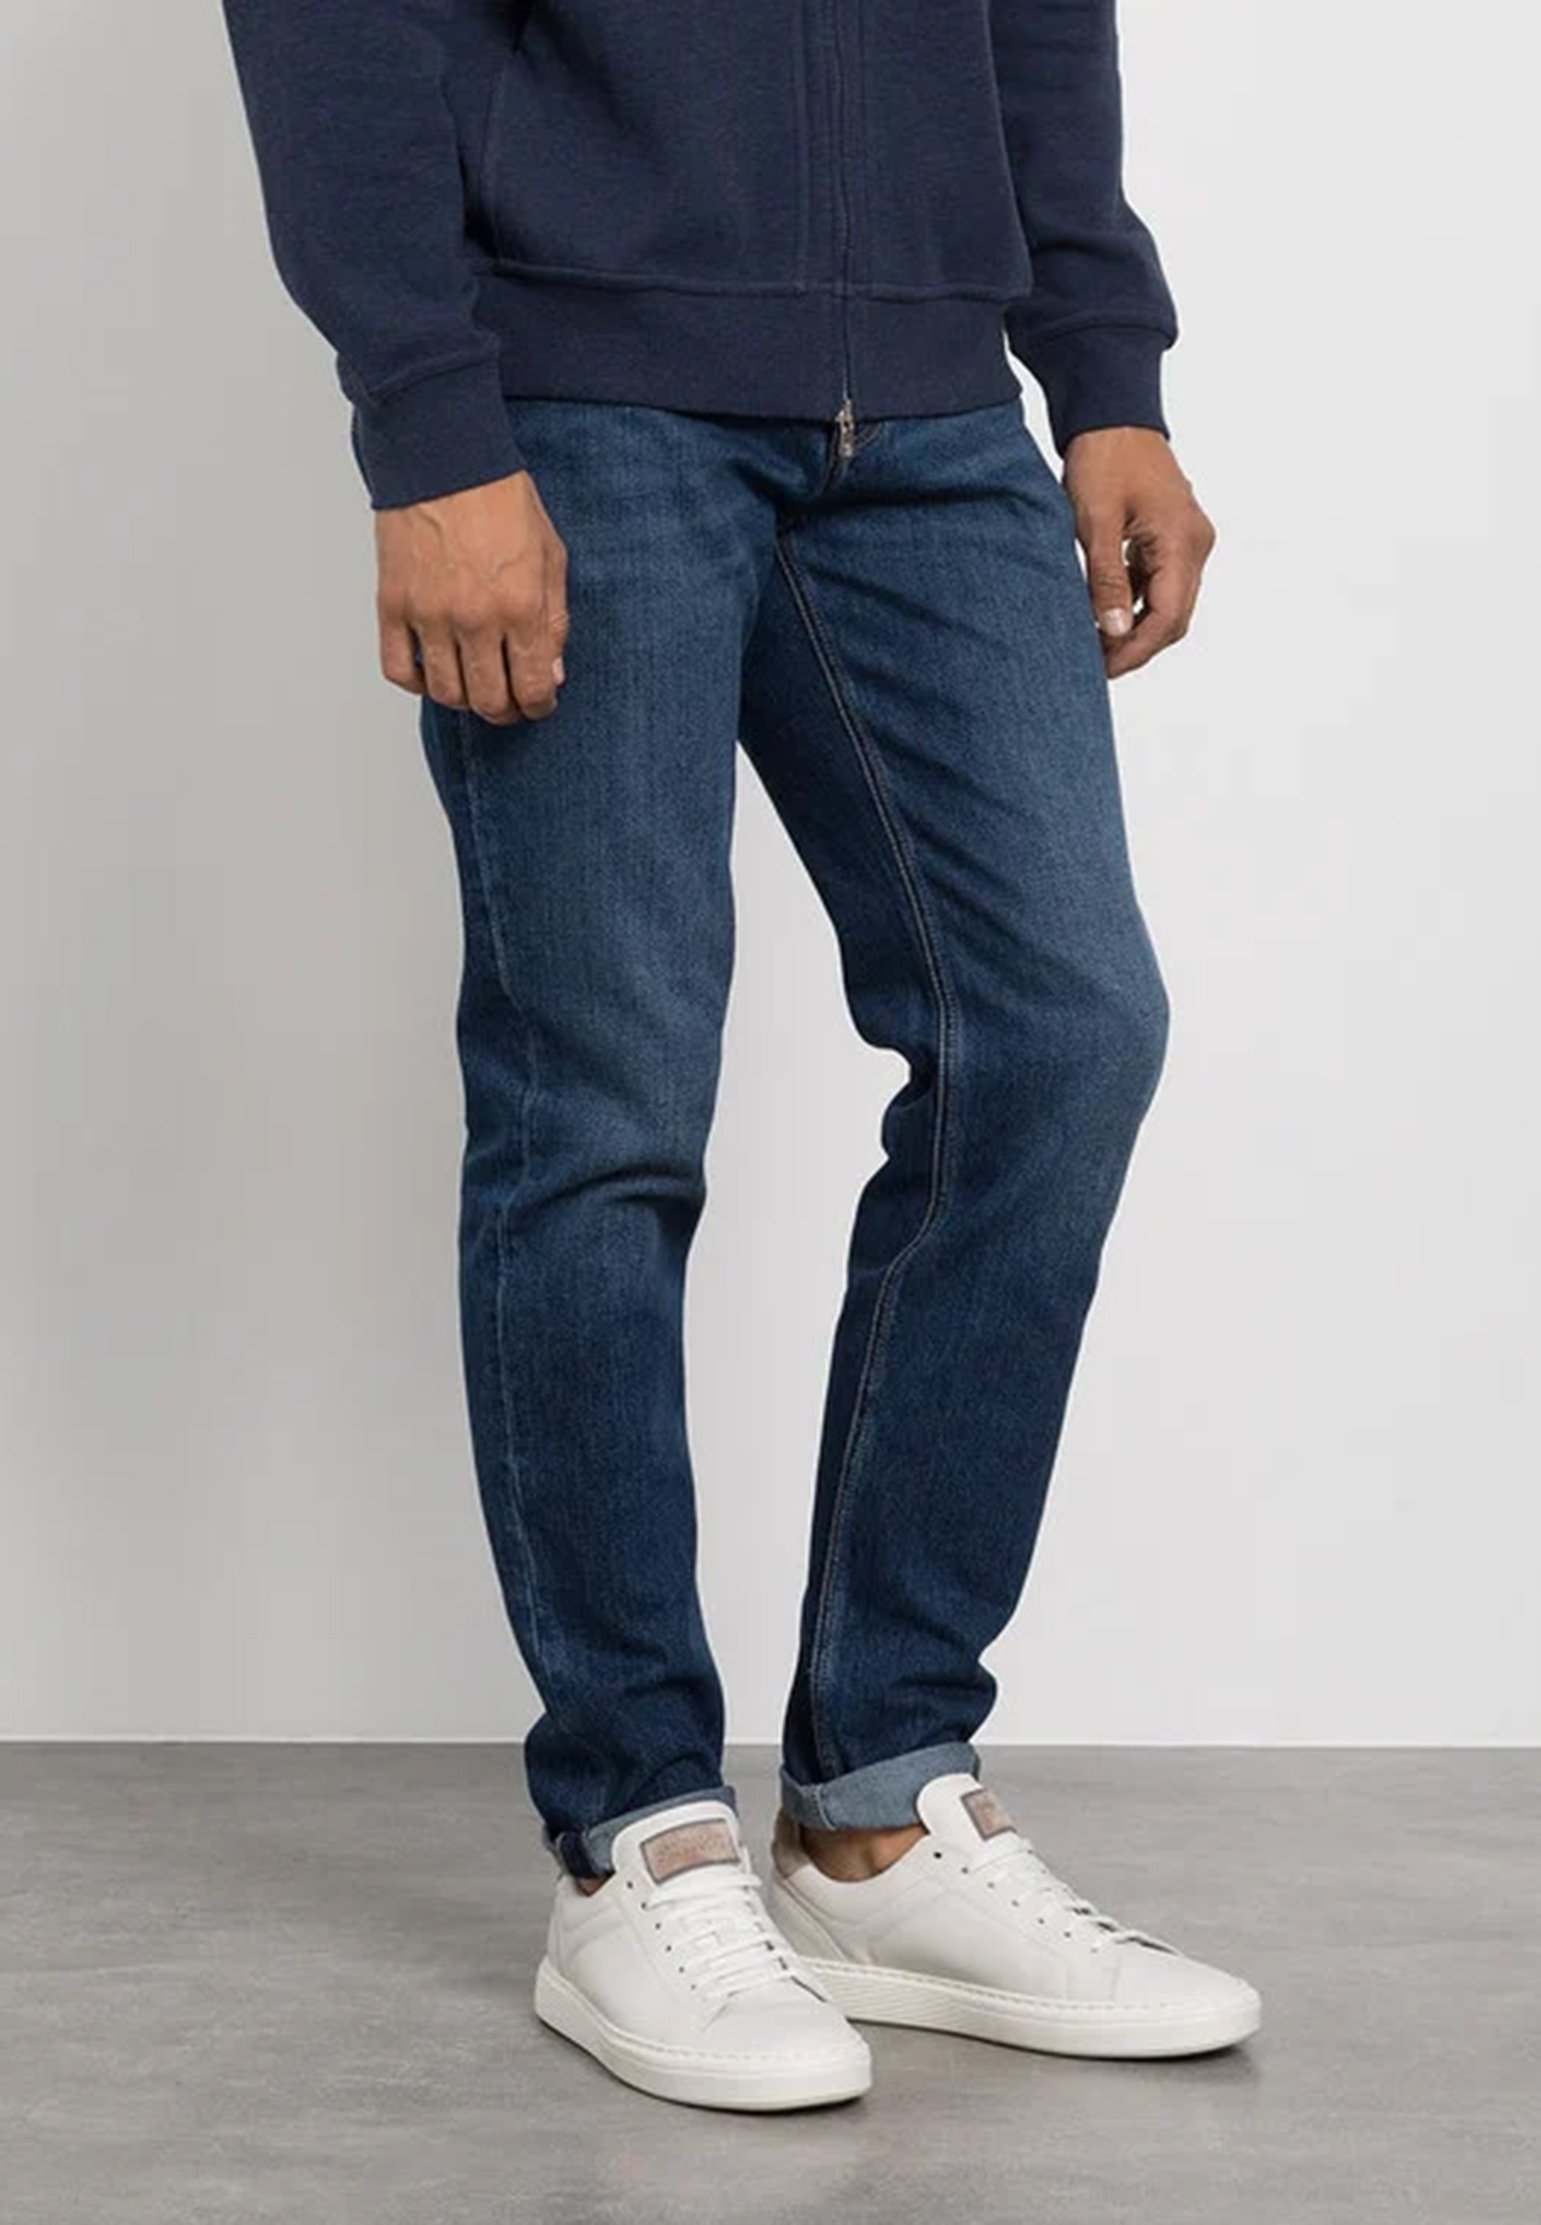 Pantalone BRUNELLO CUCINELLI Color: navy blue (Code: 1208) in online store Allure